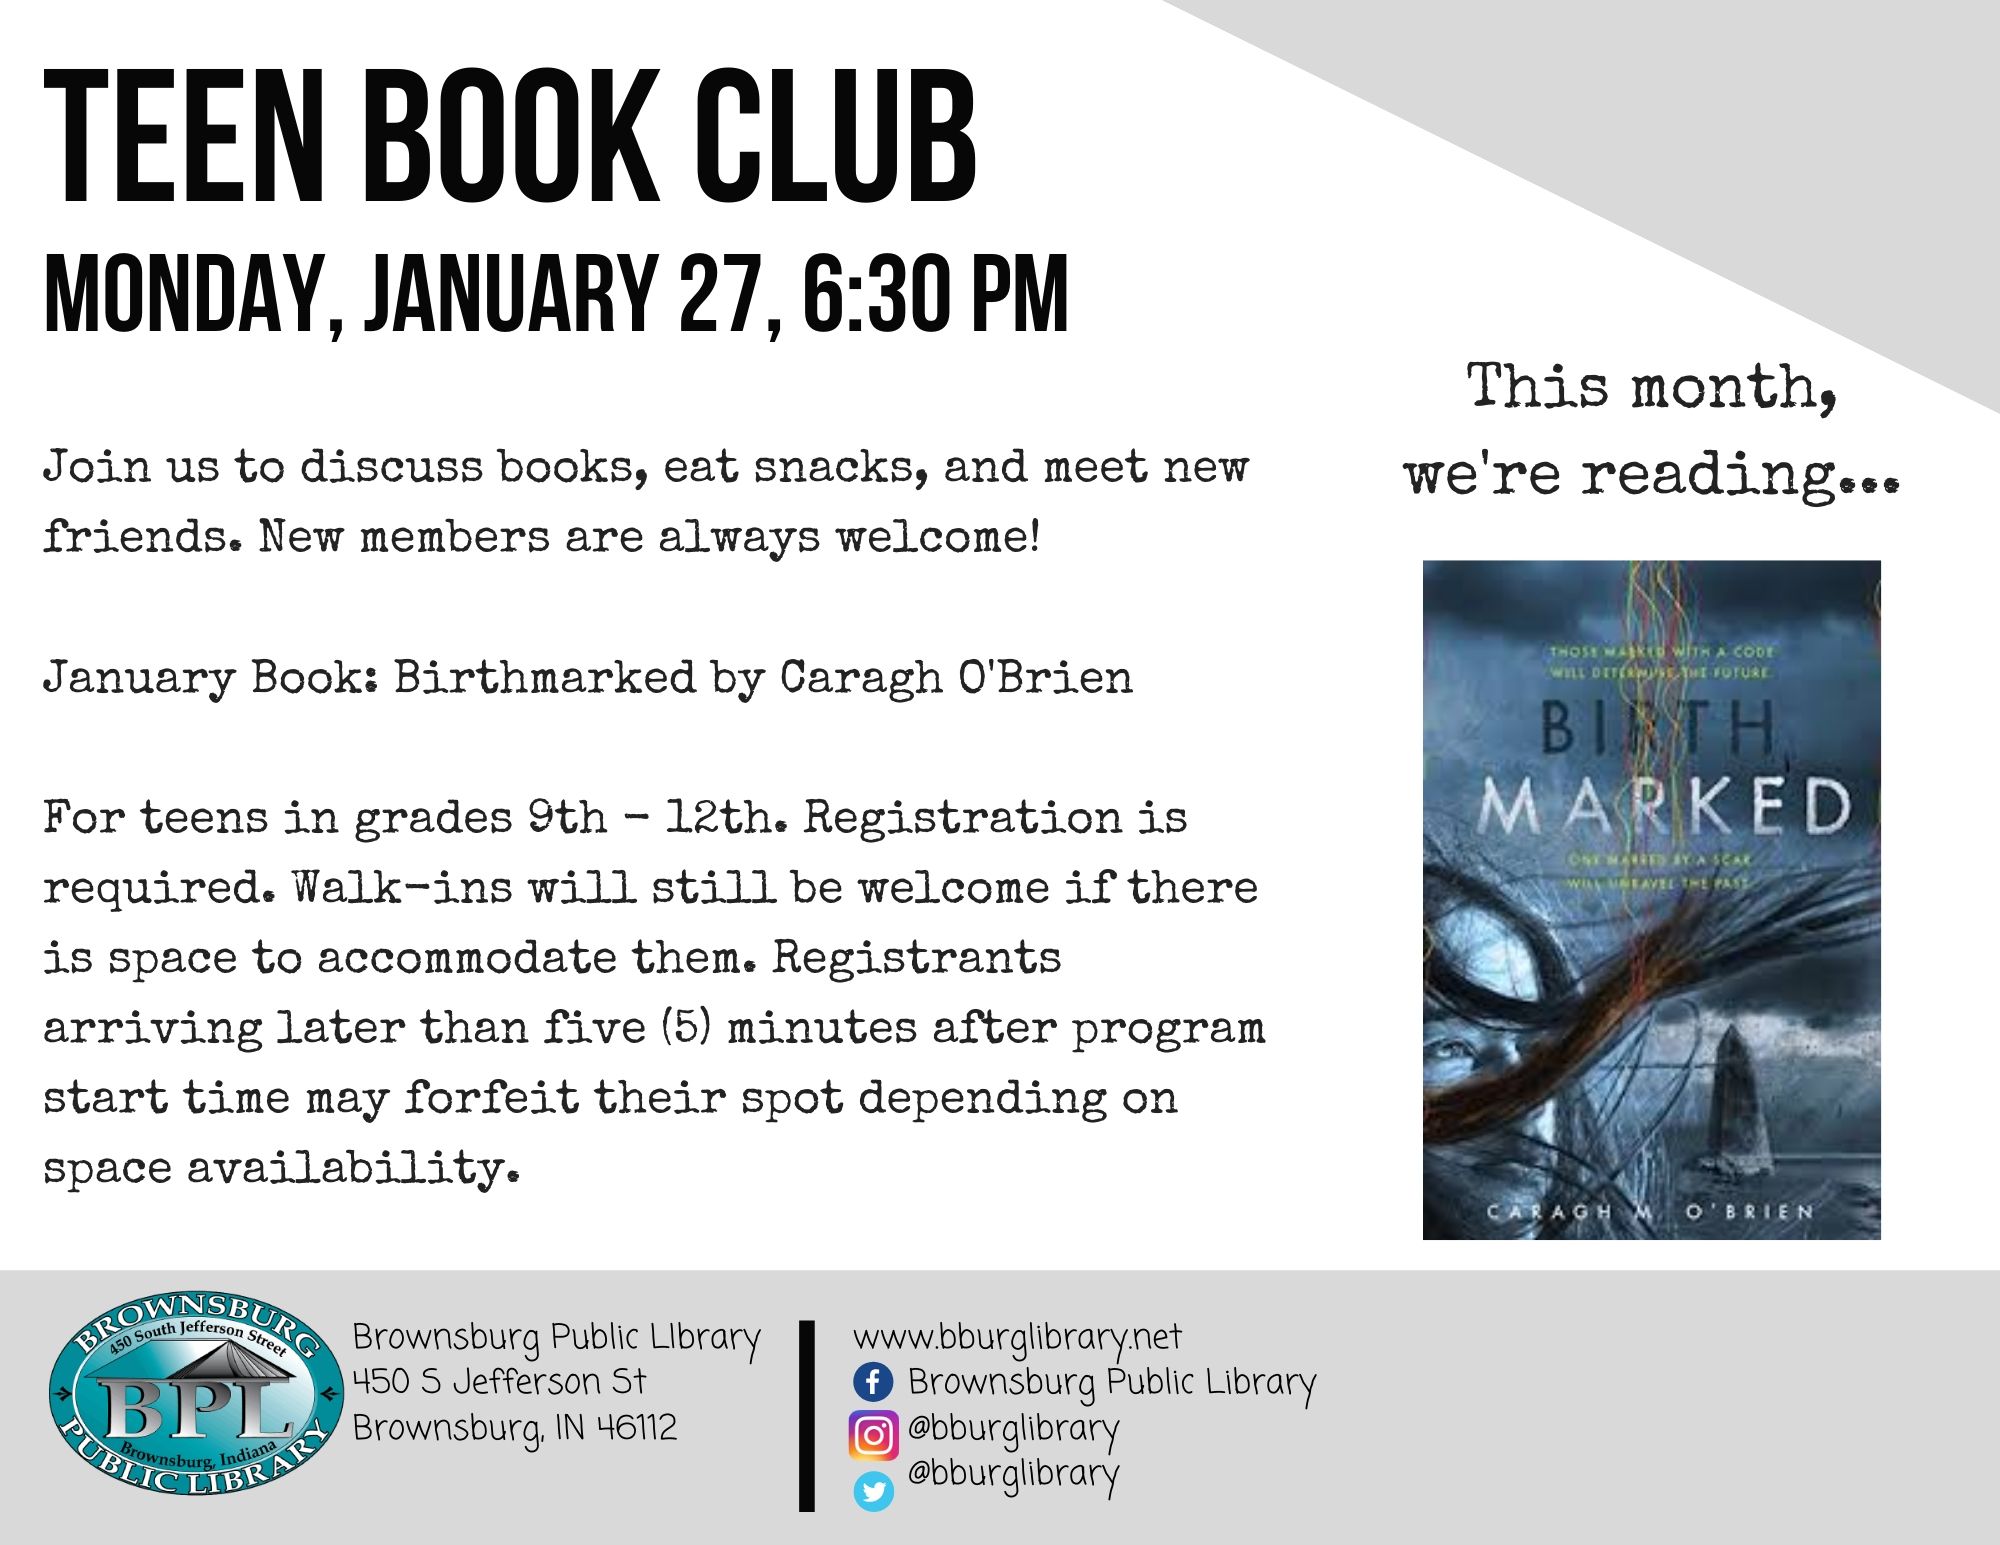 Teen Book Club January 27th at 6:30